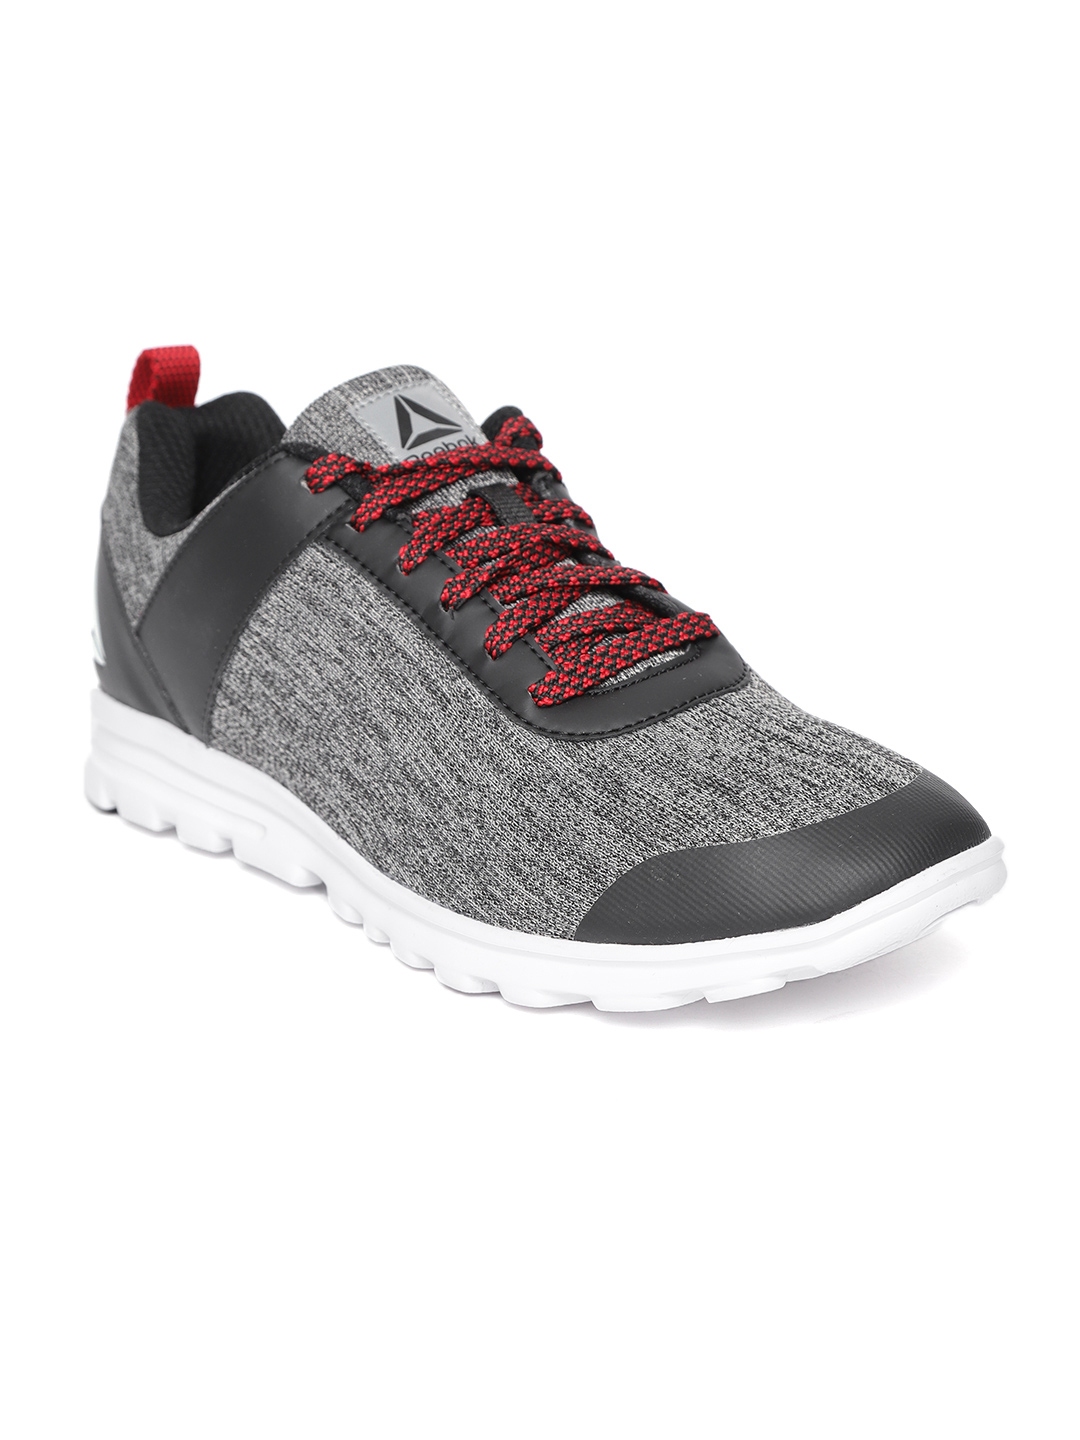 Buy Reebok Men Grey Running Shoes 